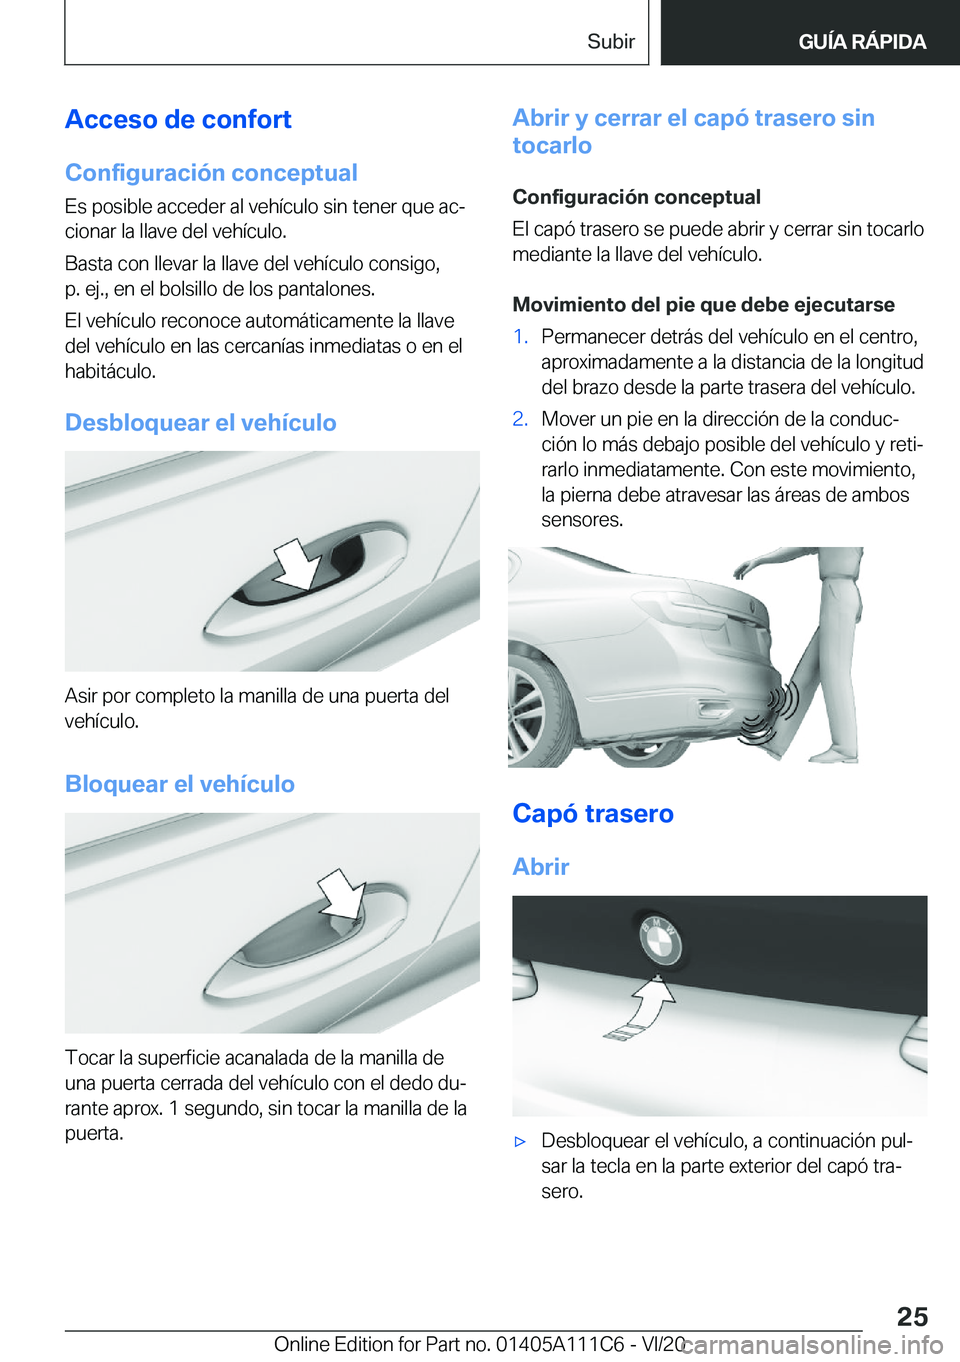 BMW 3 SERIES SEDAN PLUG-IN HYBRID 2021  Manuales de Empleo (in Spanish) �A�c�c�e�s�o��d�e��c�o�n�f�o�r�t
�C�o�n�f�i�g�u�r�a�c�i�